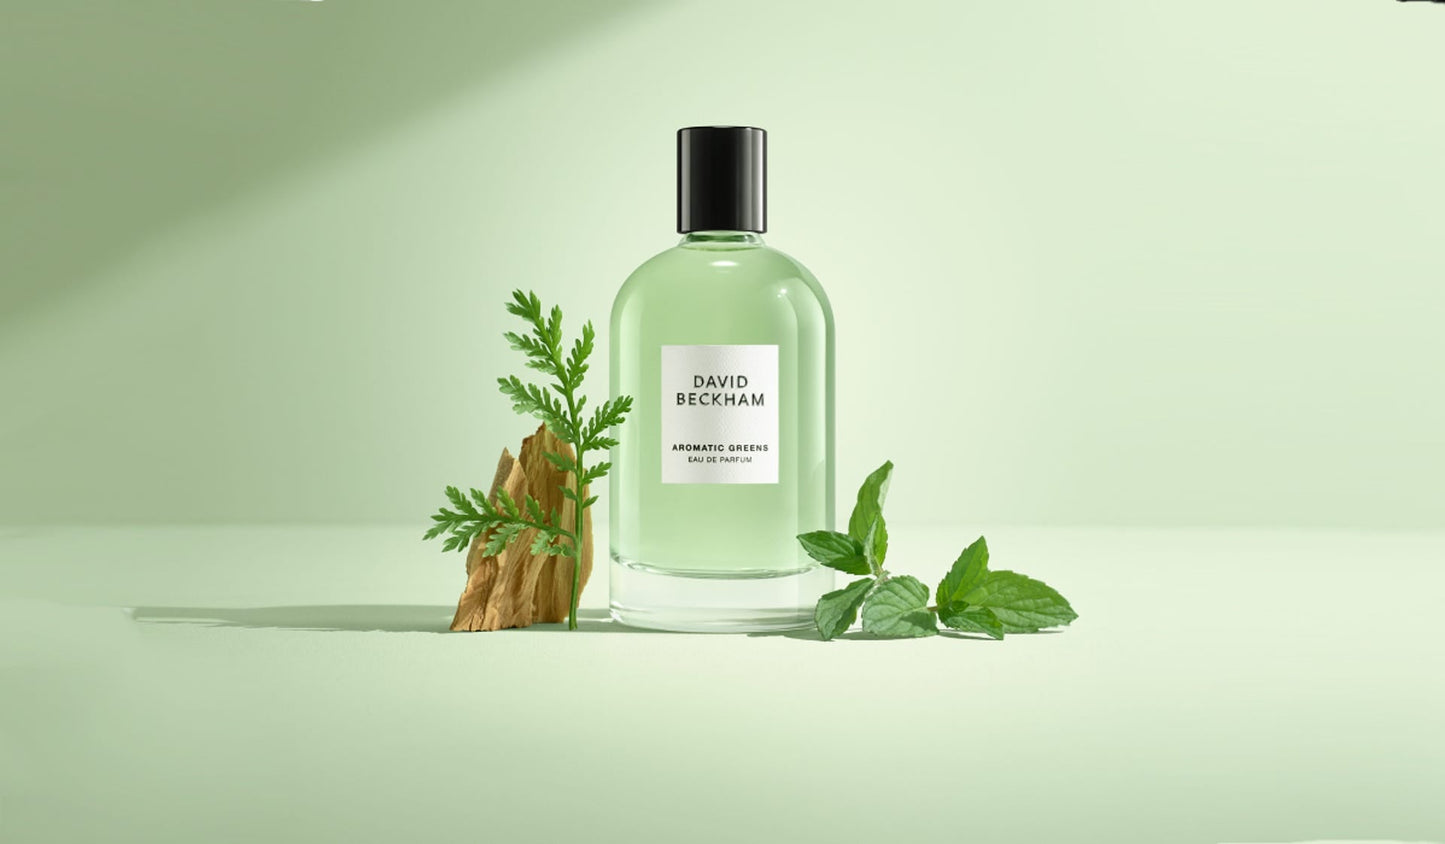 David Beckham Aromatic Greens EDP 100ml Perfume - Flowers to Nepal - FTN